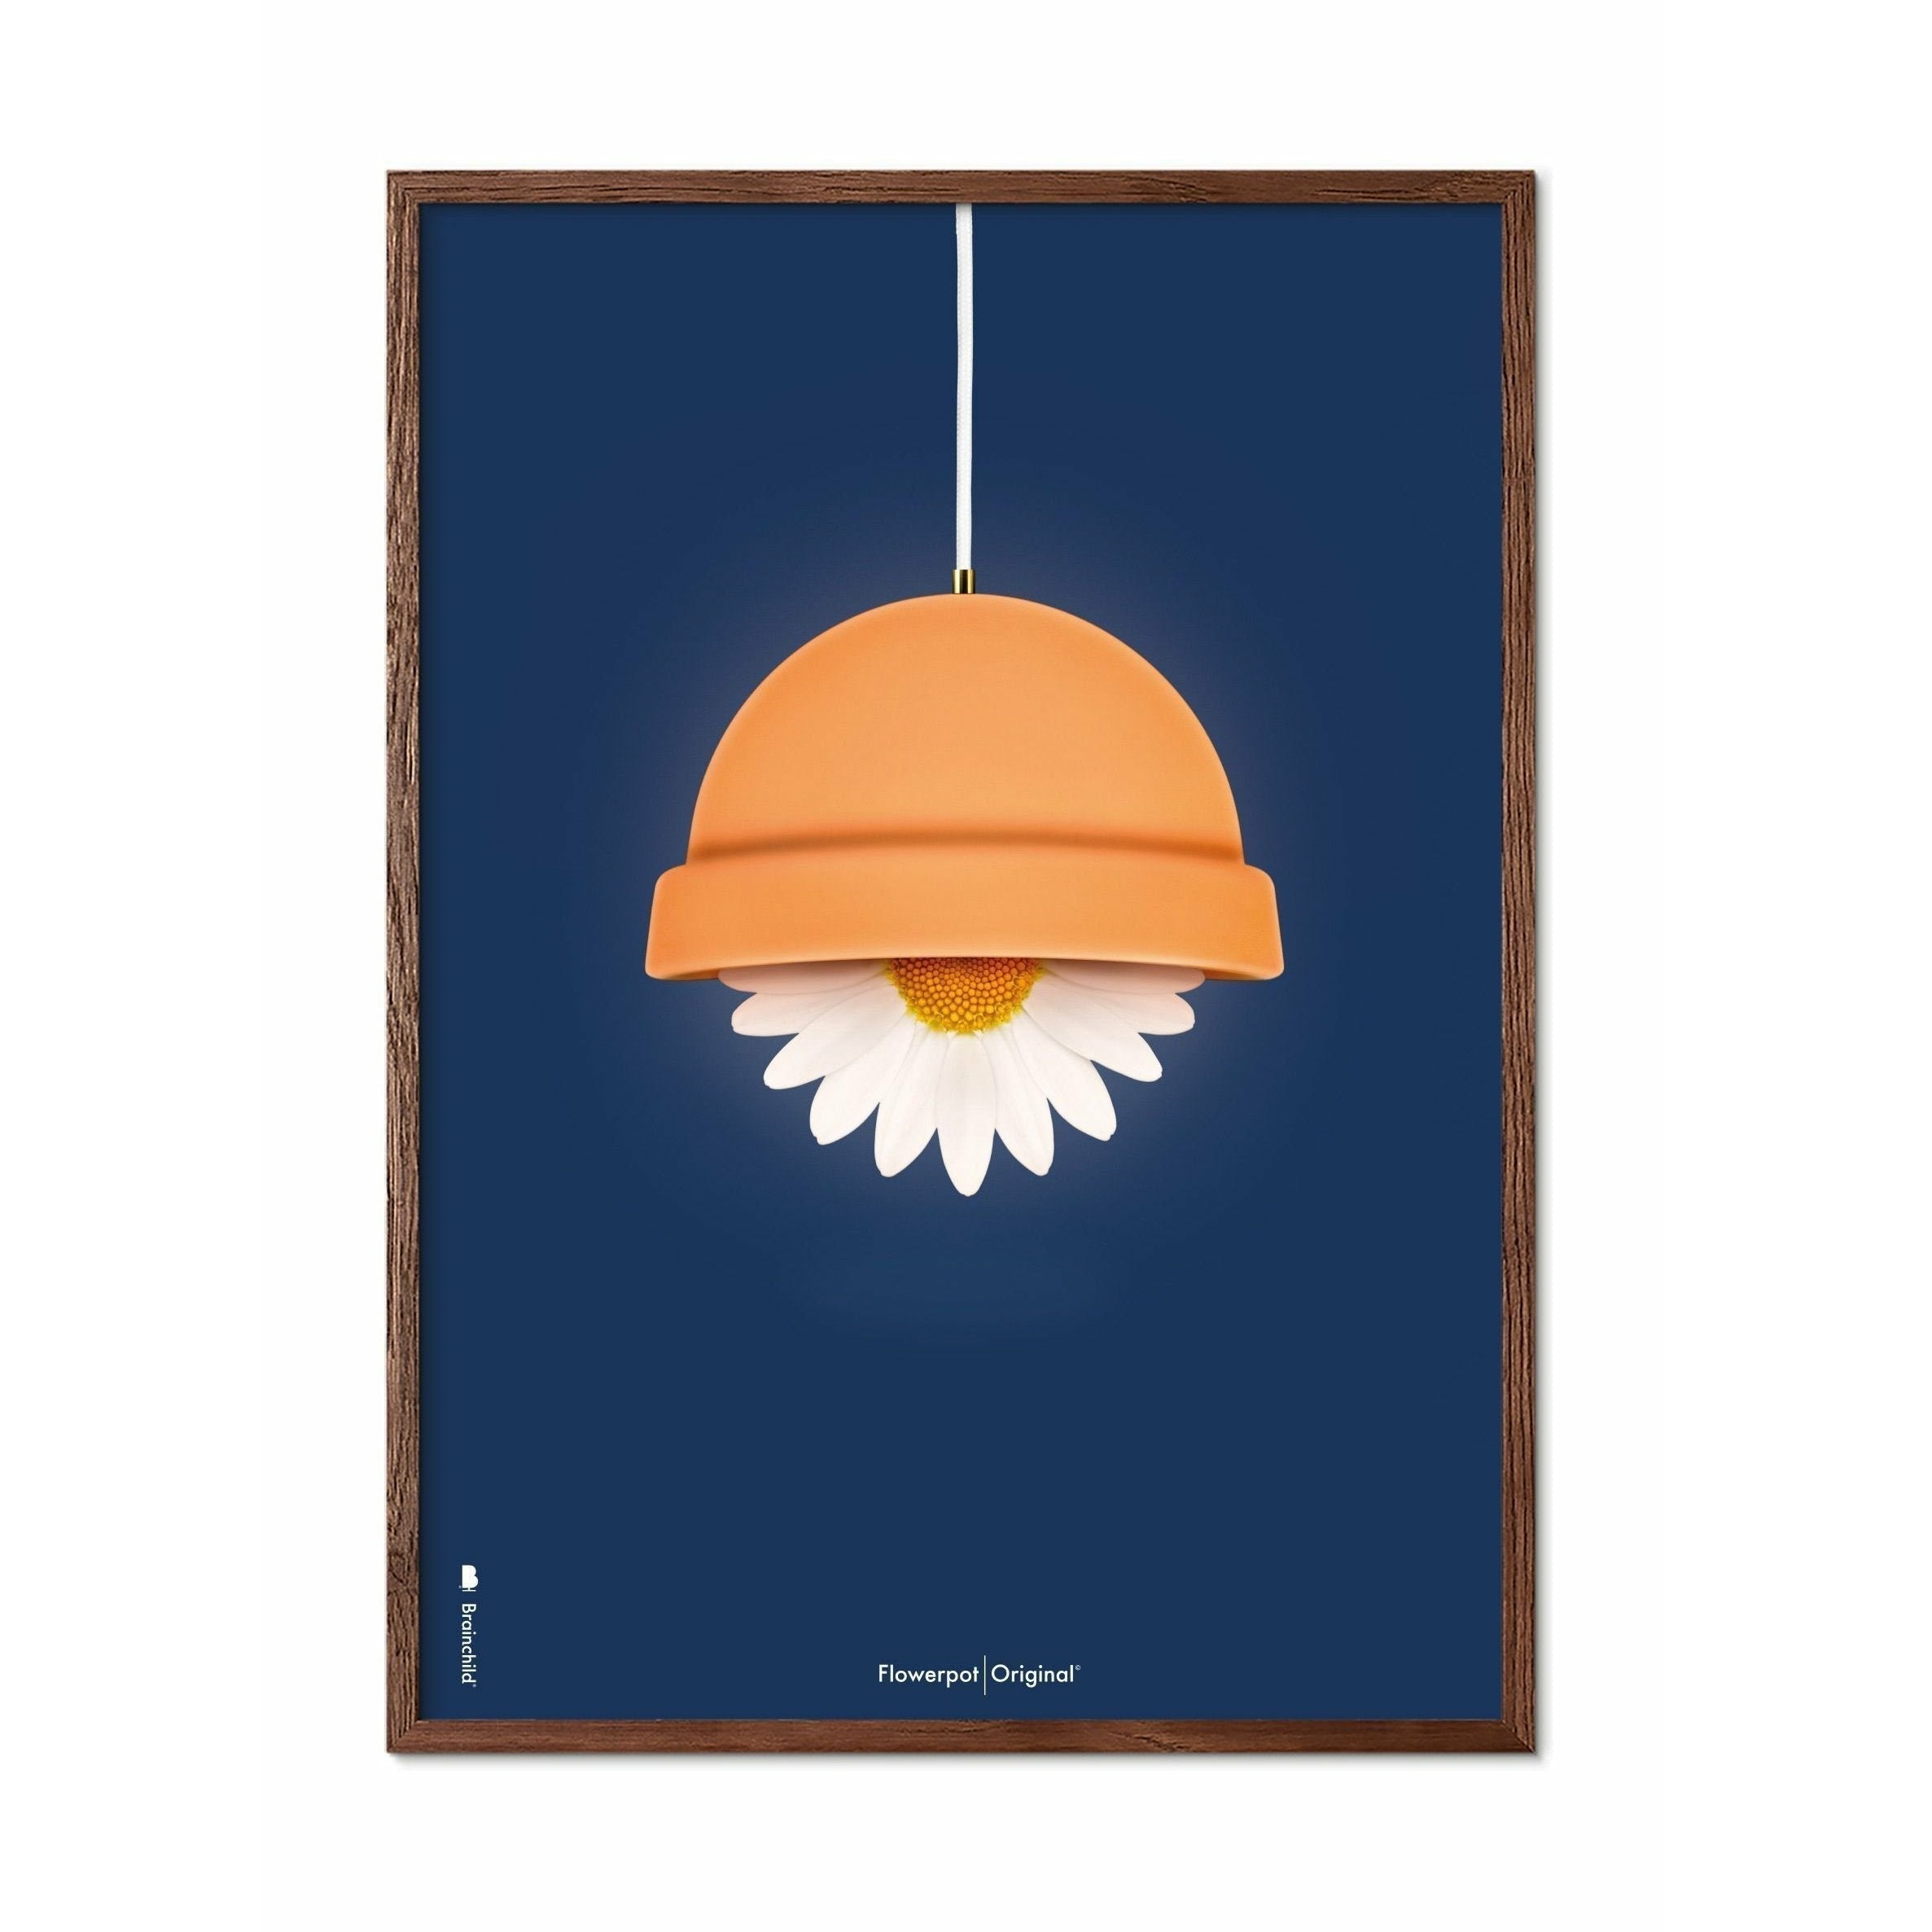 Brainchild Flowerpot Classic Poster, ram i mörkt trä 70x100 cm, mörkblå bakgrund